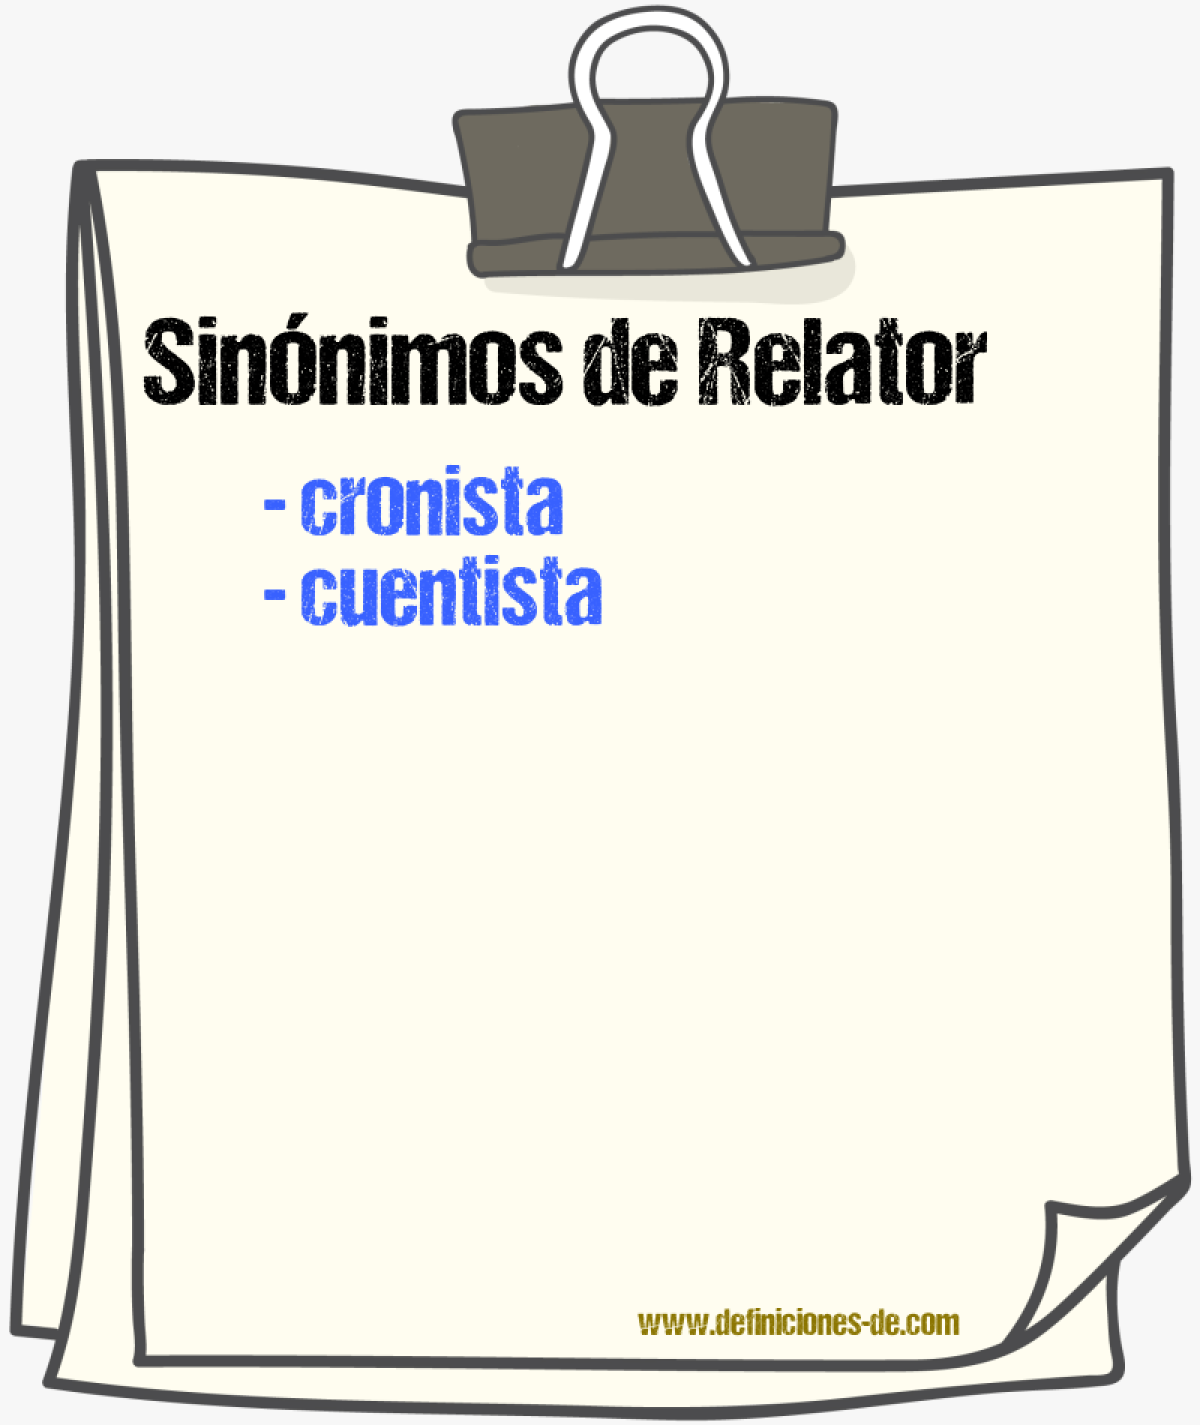 Sinónimos de relator